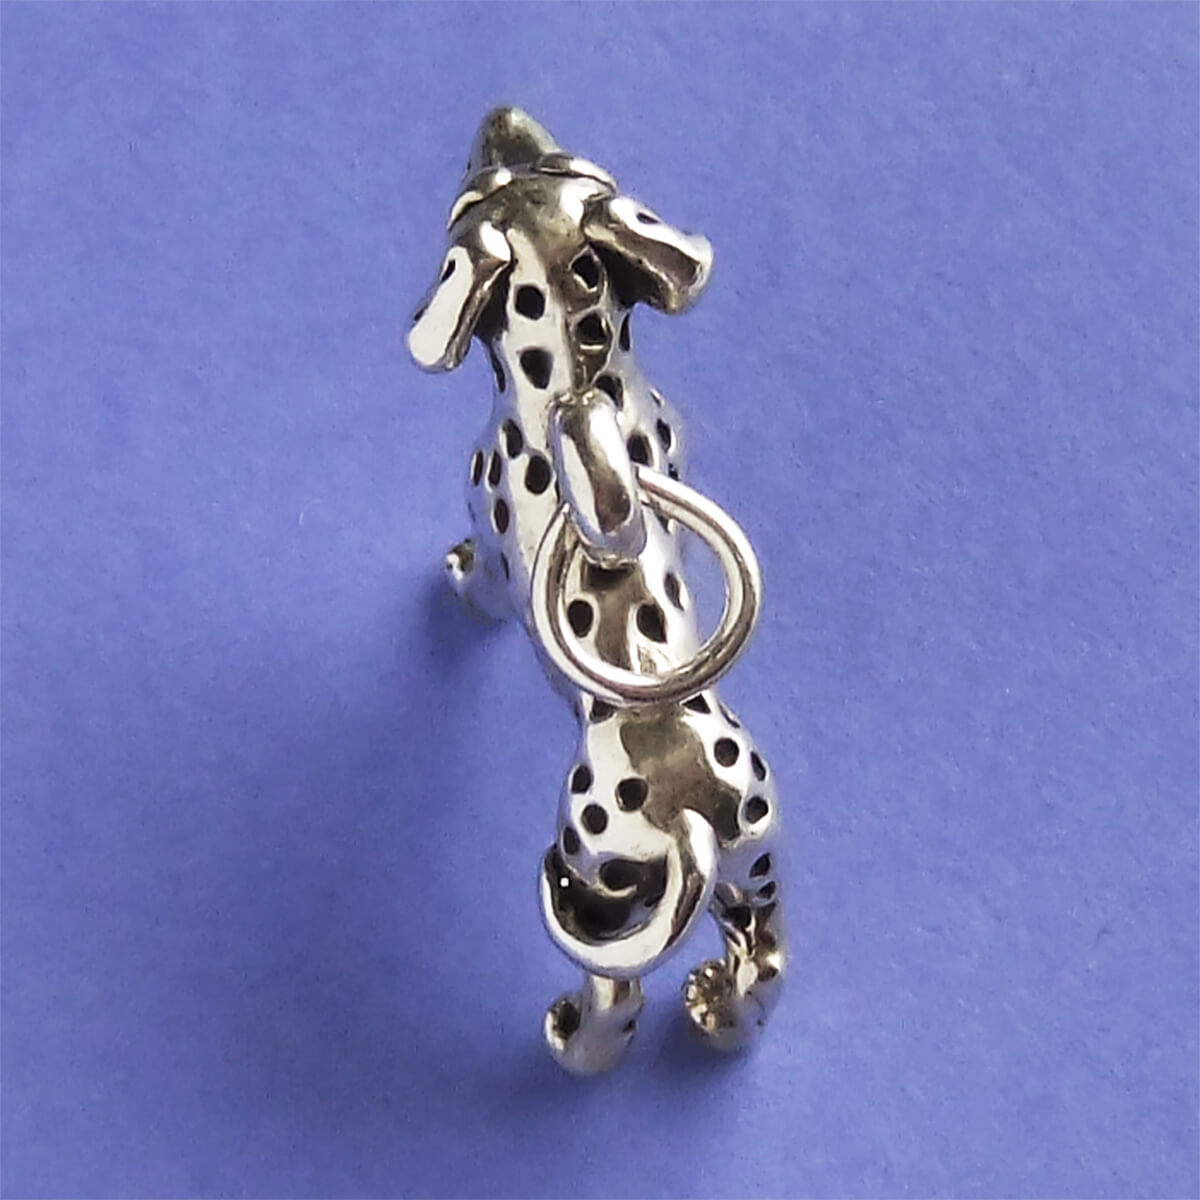 Dalmatian dog charm sterling silver 925 dog pendant from Charmarama